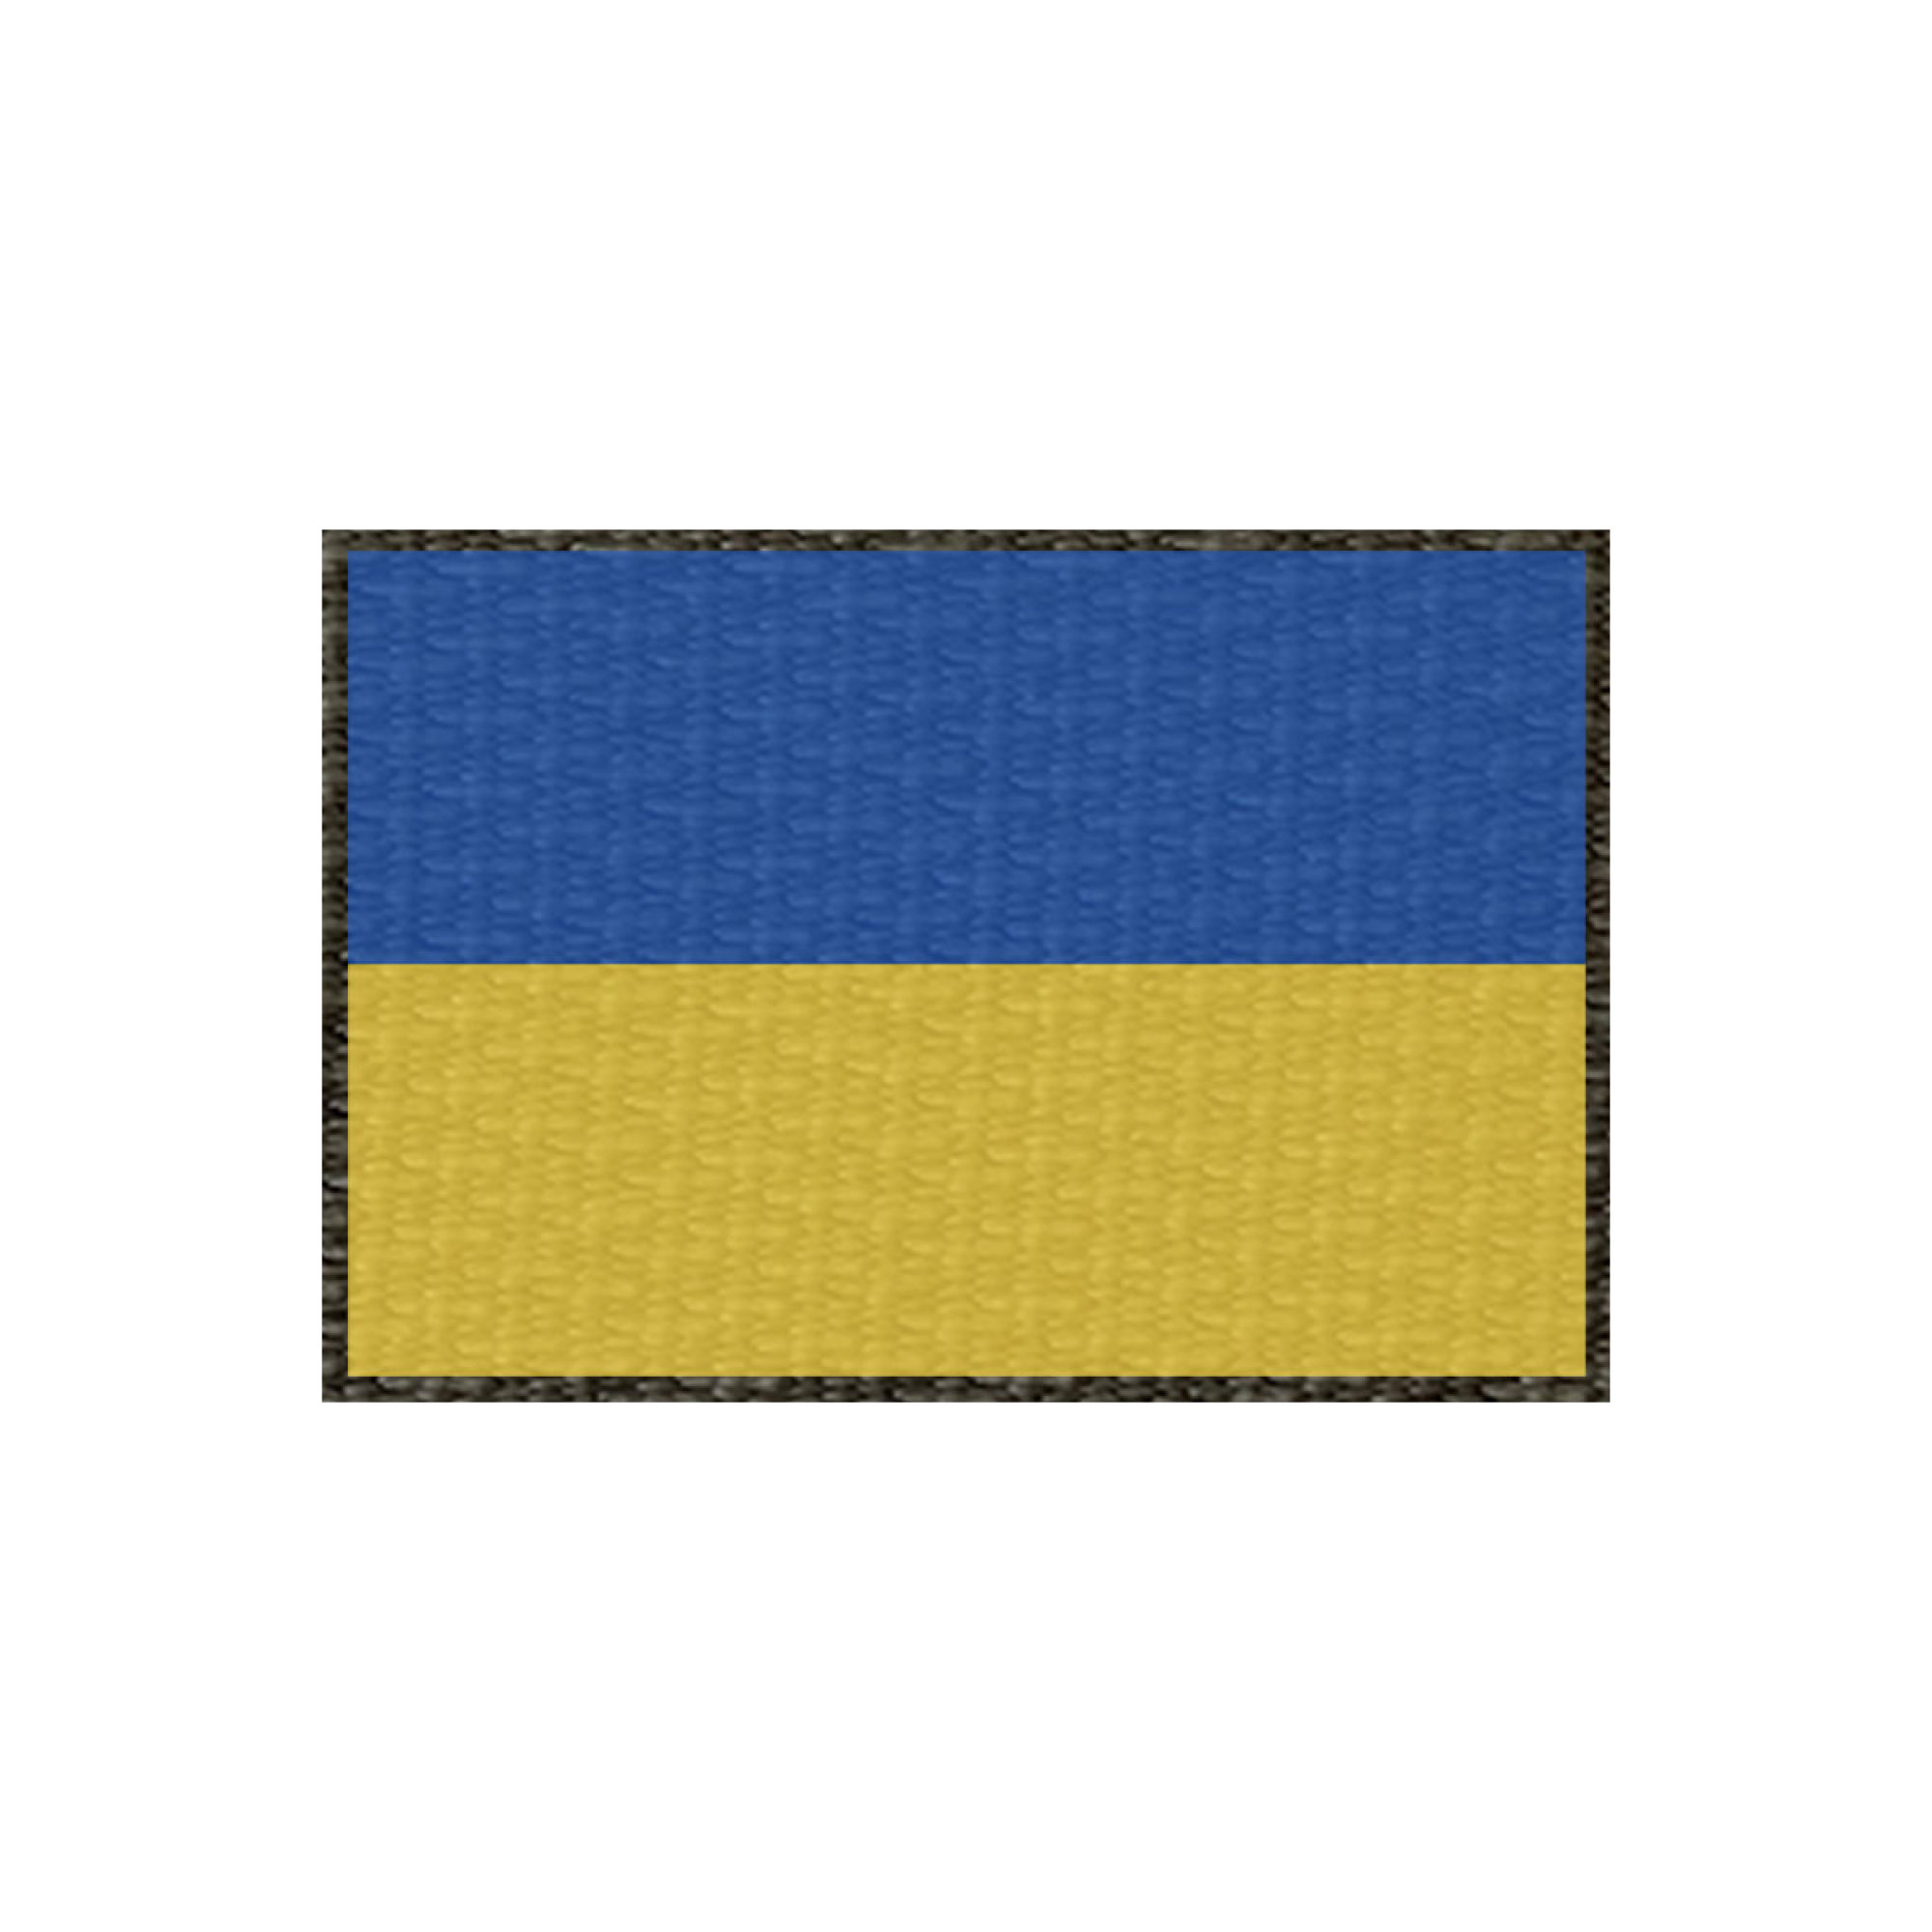 Patch Flagge Ukraine 45x30mm, Klett